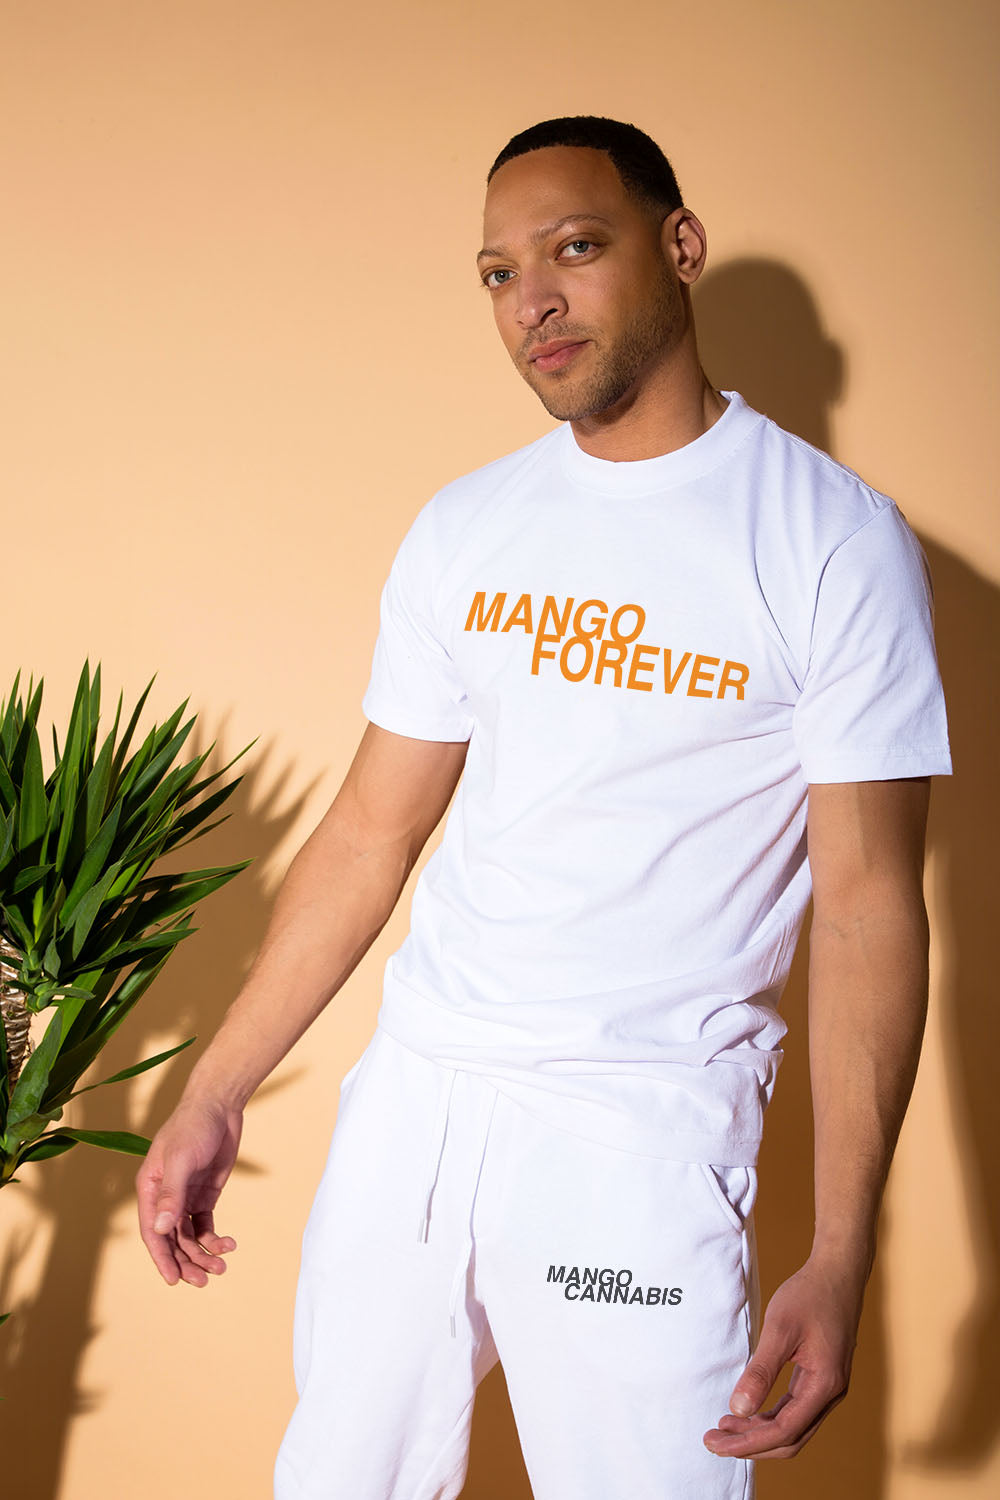 MangoForever Heavyweight Tee in Orange